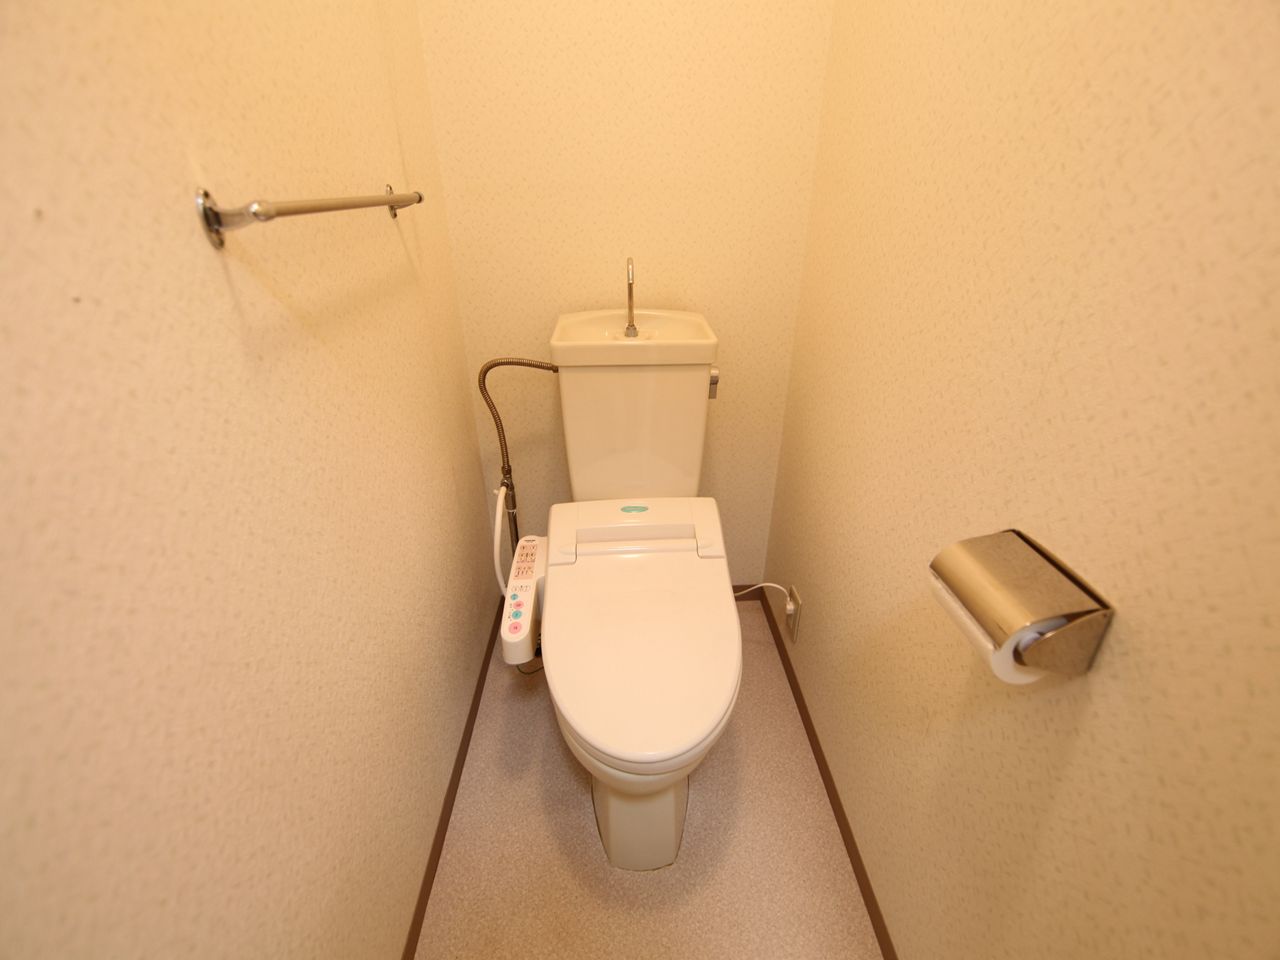 Toilet. toilet Warm water washing heating toilet seat